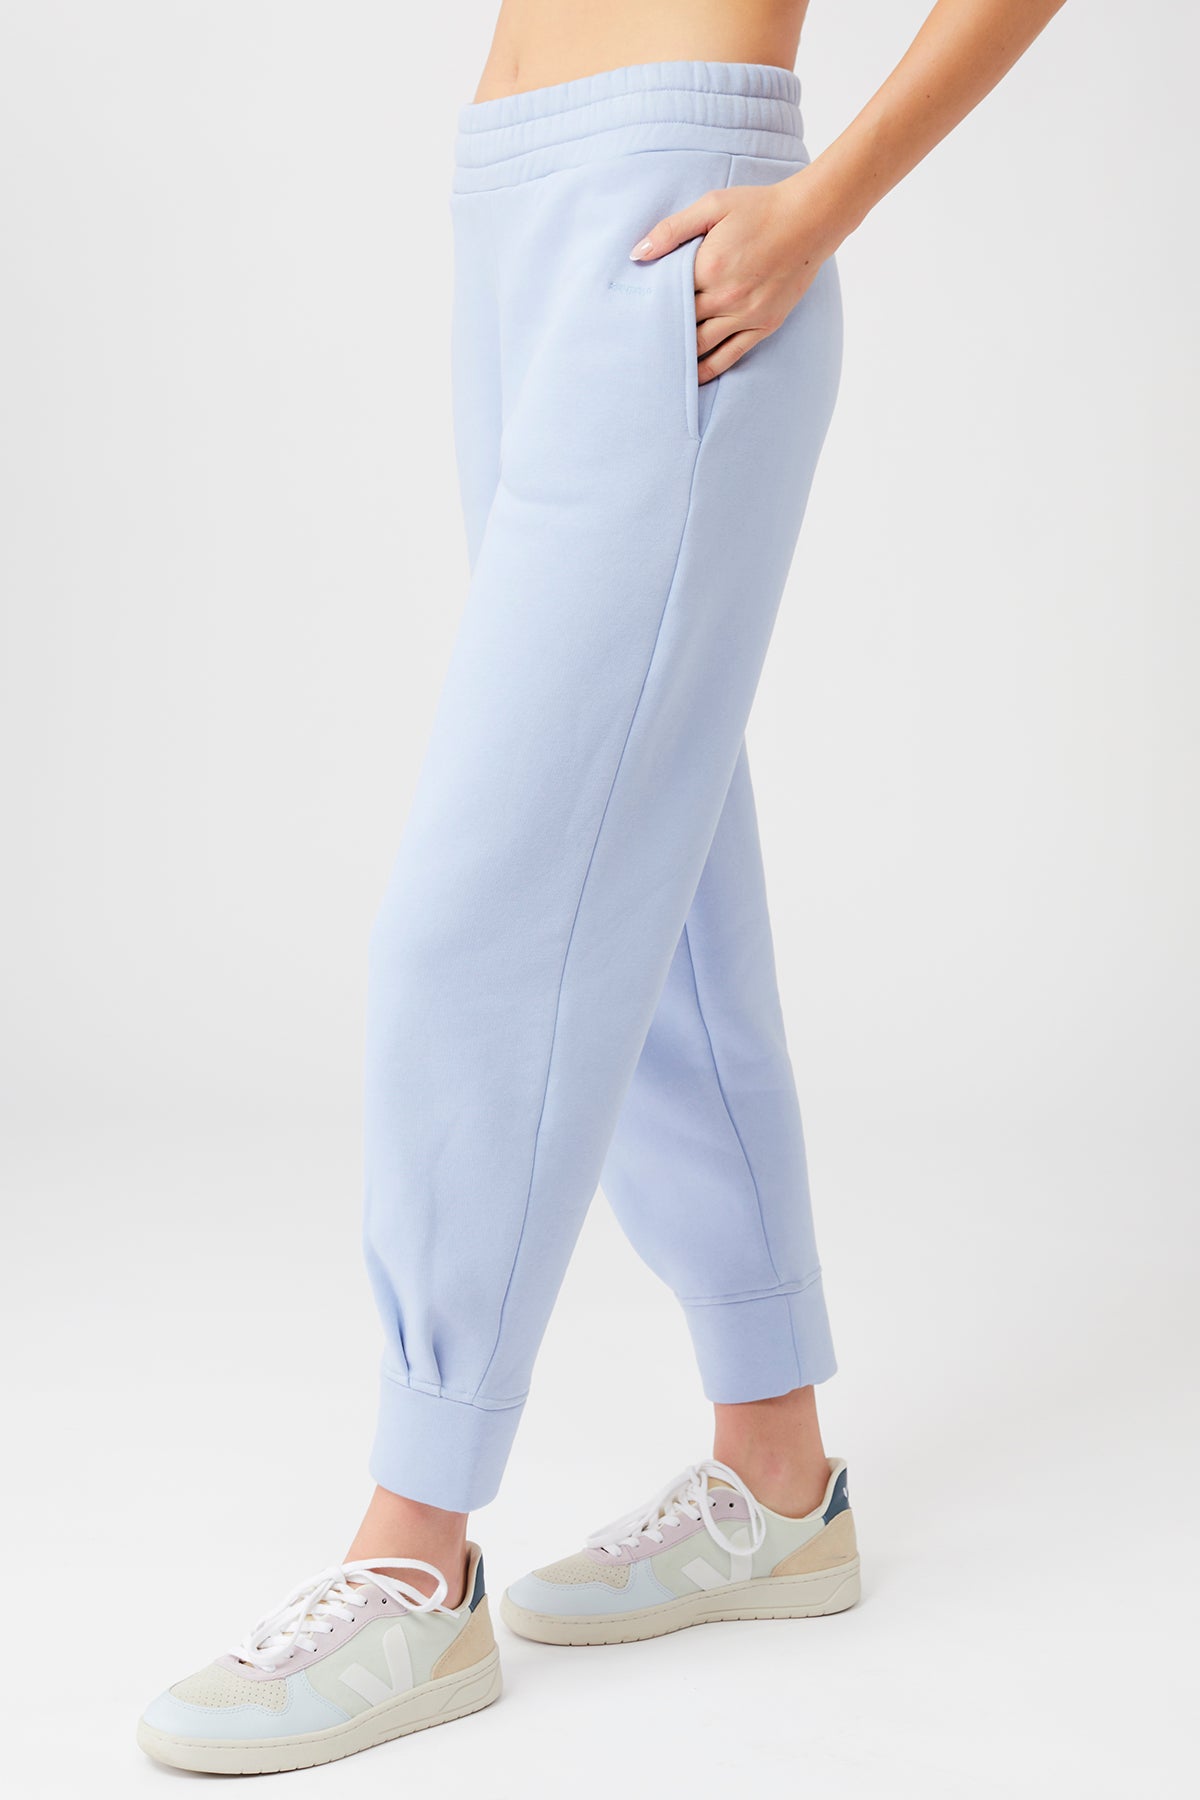 Mandala Yoga Pant Blau Seite - Natural Dye Track Pants